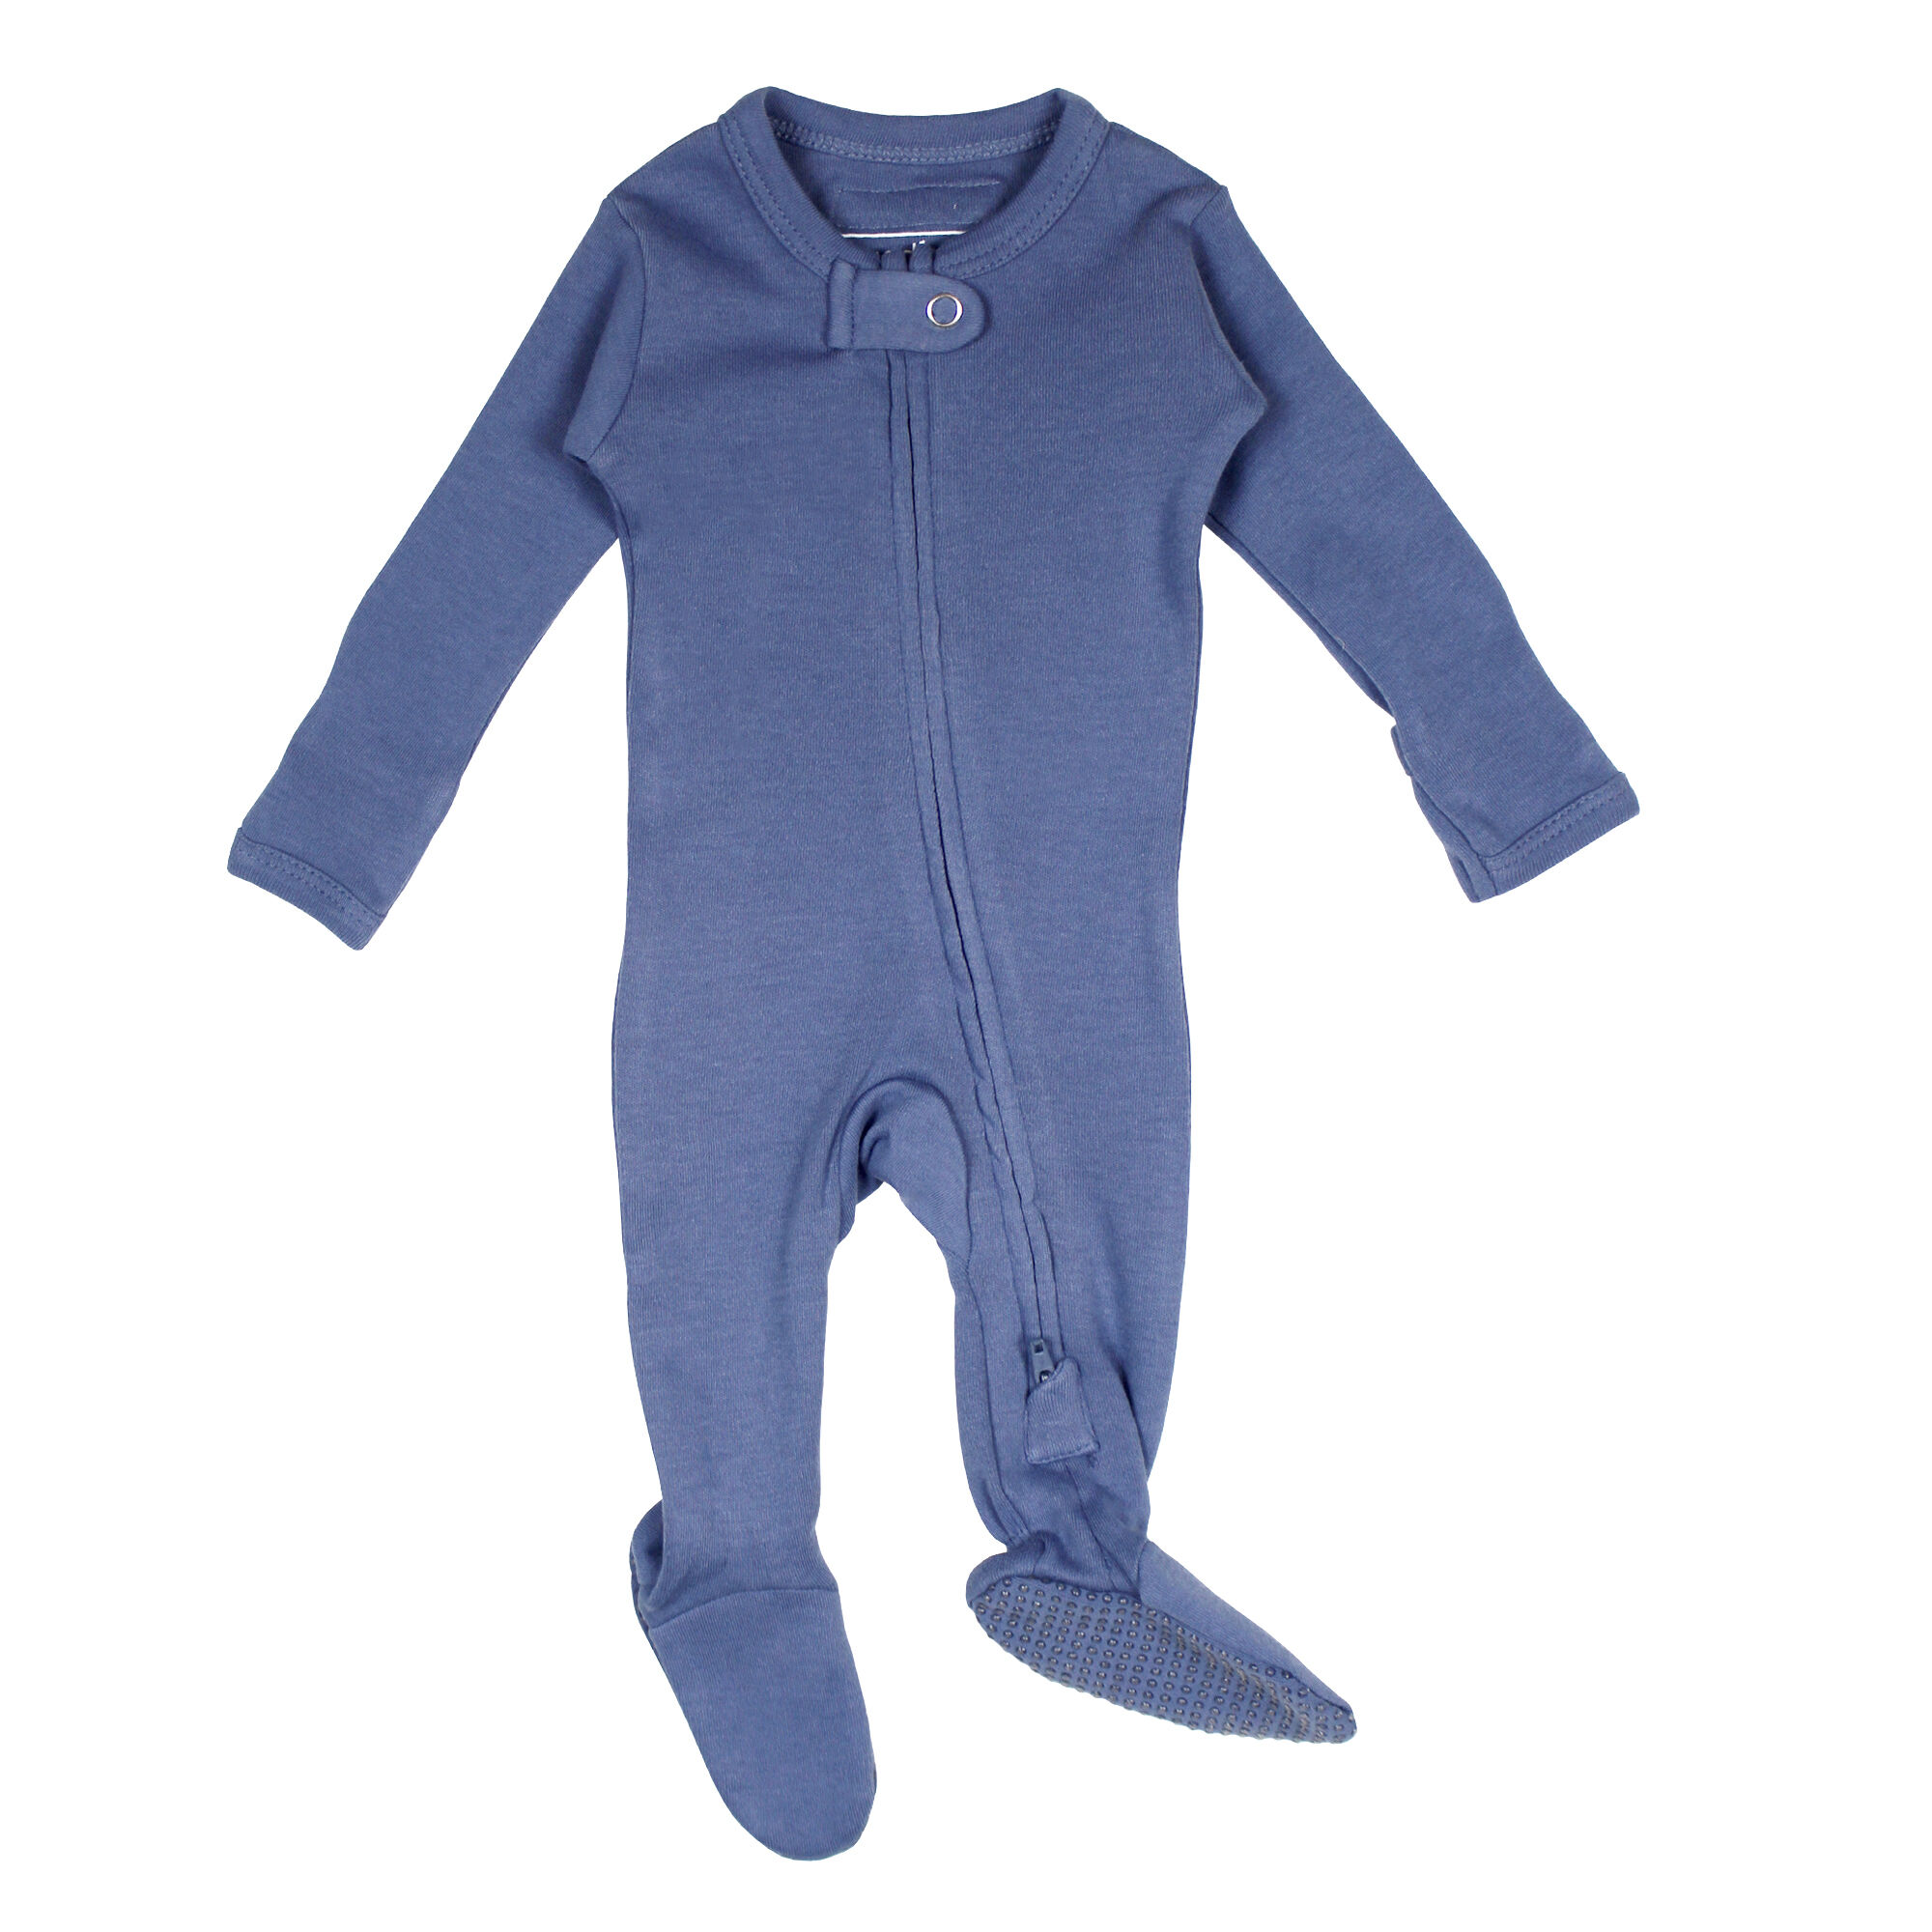 L'ovedbaby Baby Unisex 100% Organic Cotton Zipper Footie, Sleep N Play ...